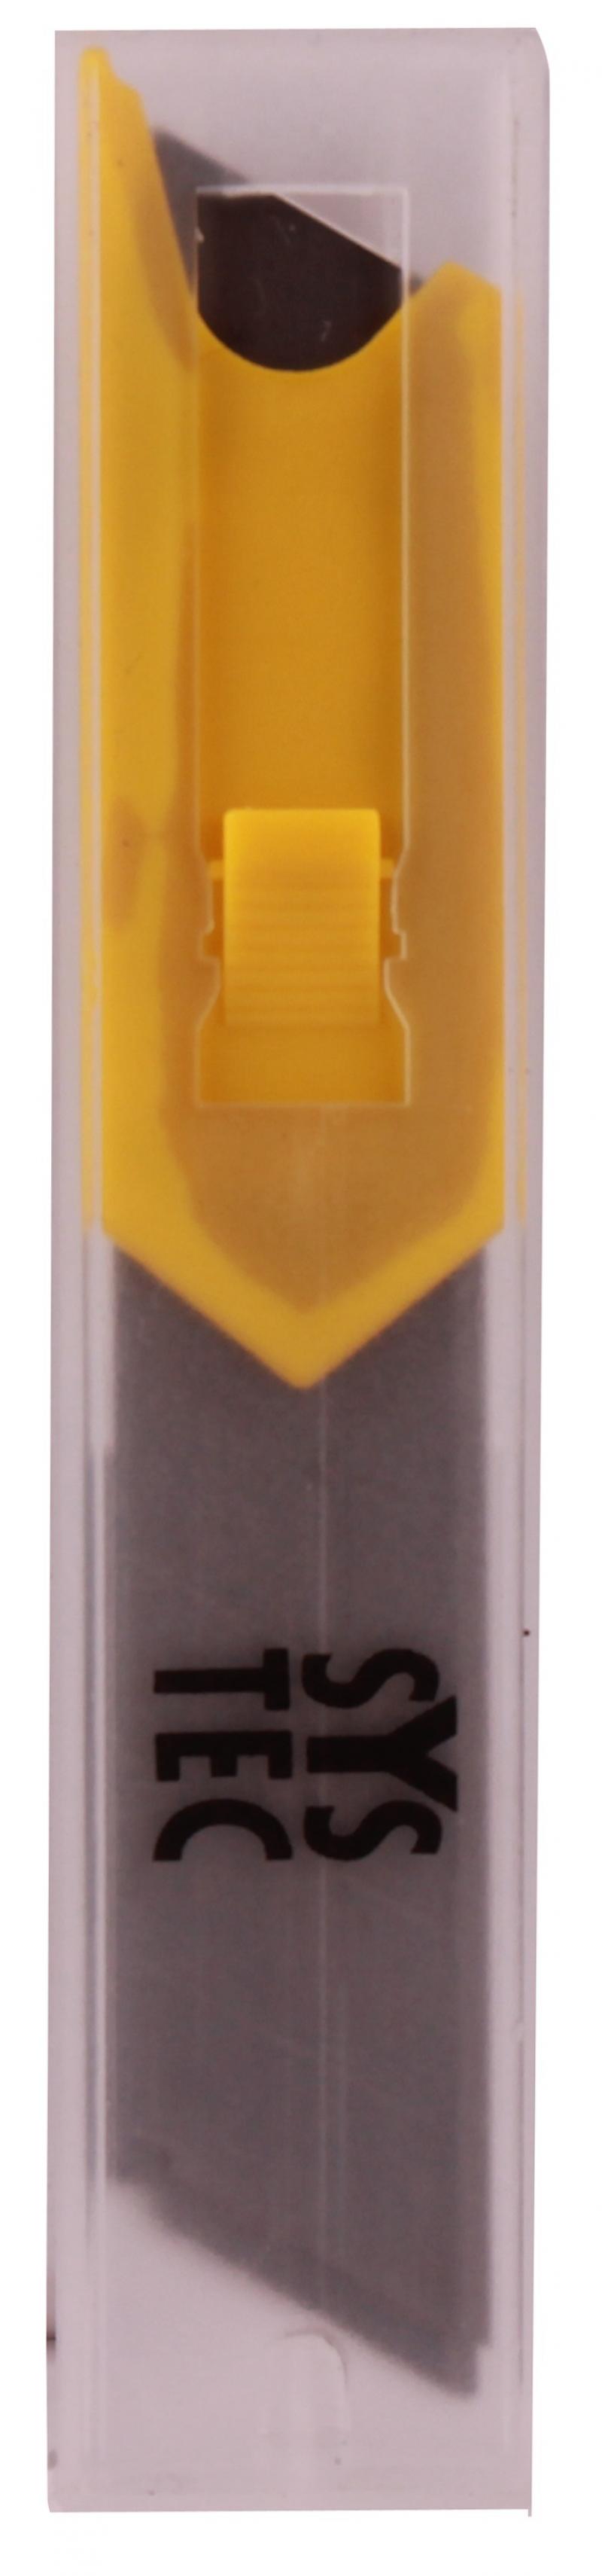 Лезвия для ножа Systec 18 мм, 10 шт.